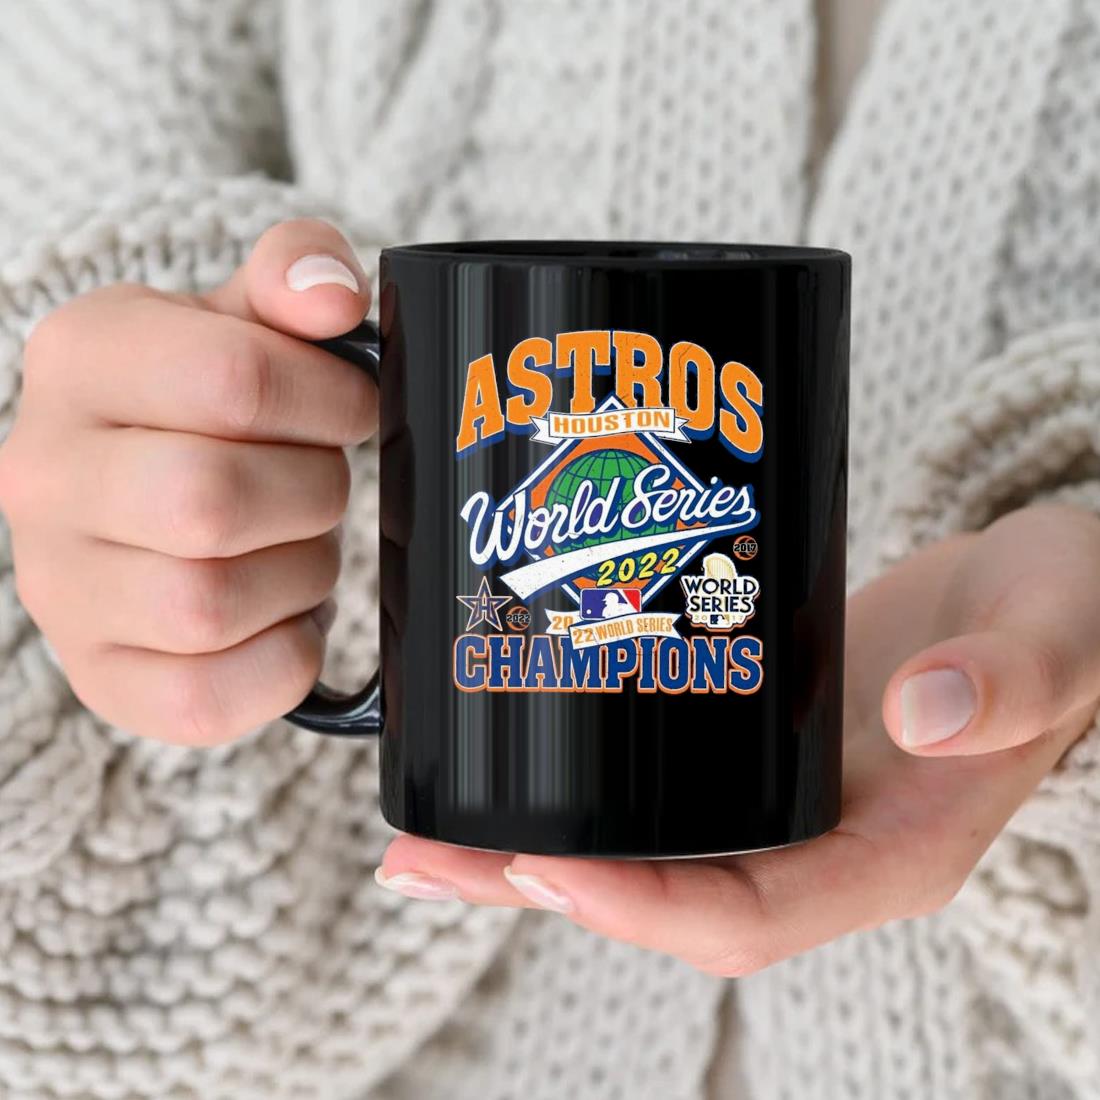 Vintage Houston Astros Styles 90s Sweatshirt World Series 2022